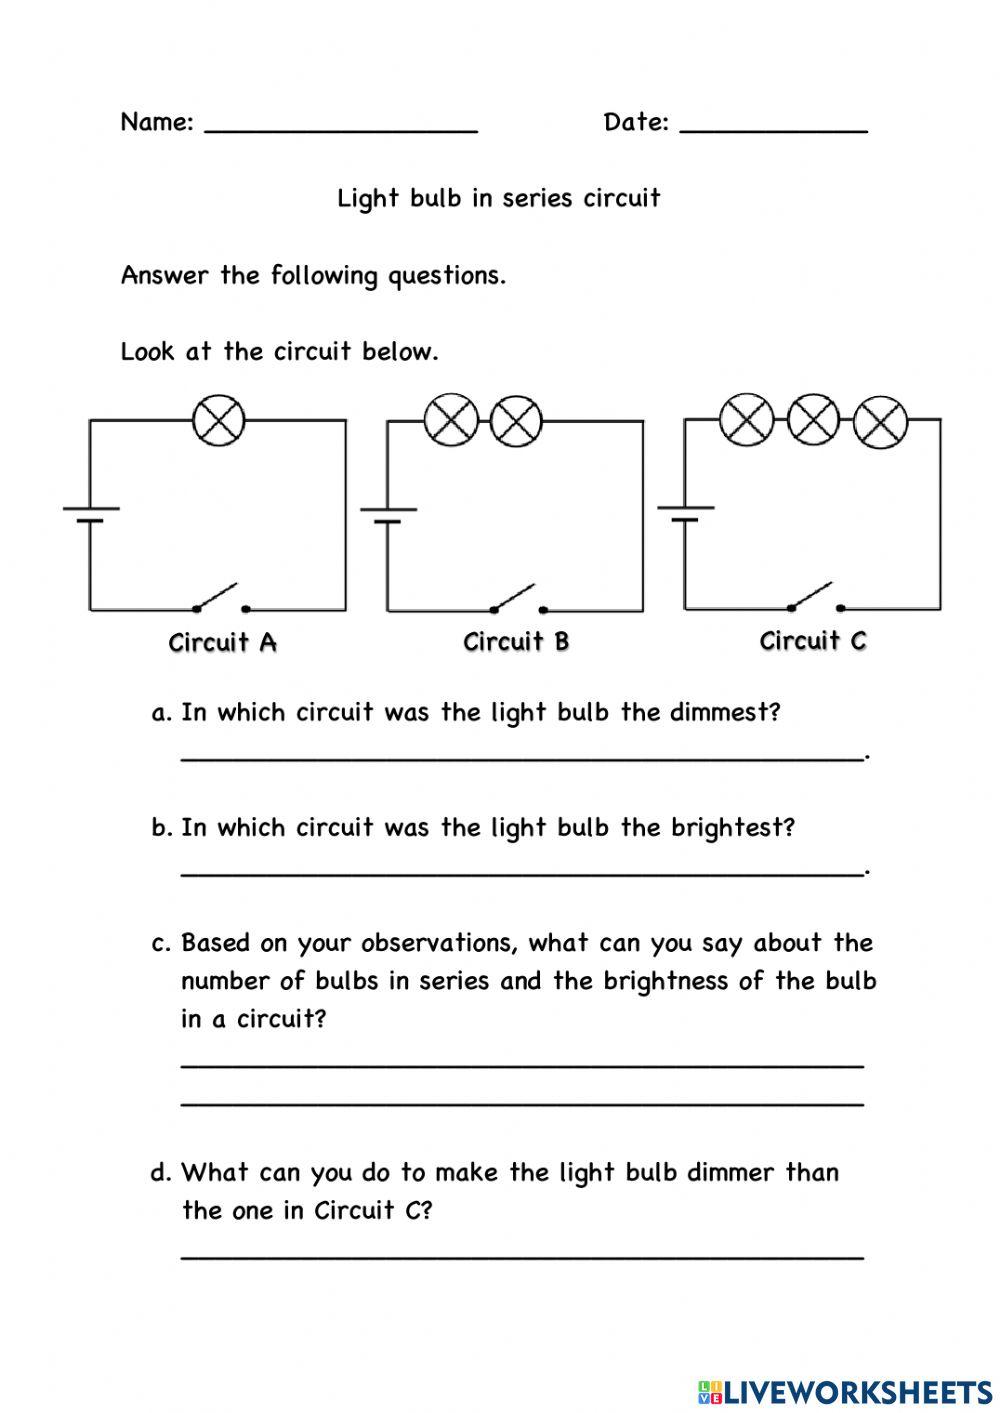 Light bulb in series circuit